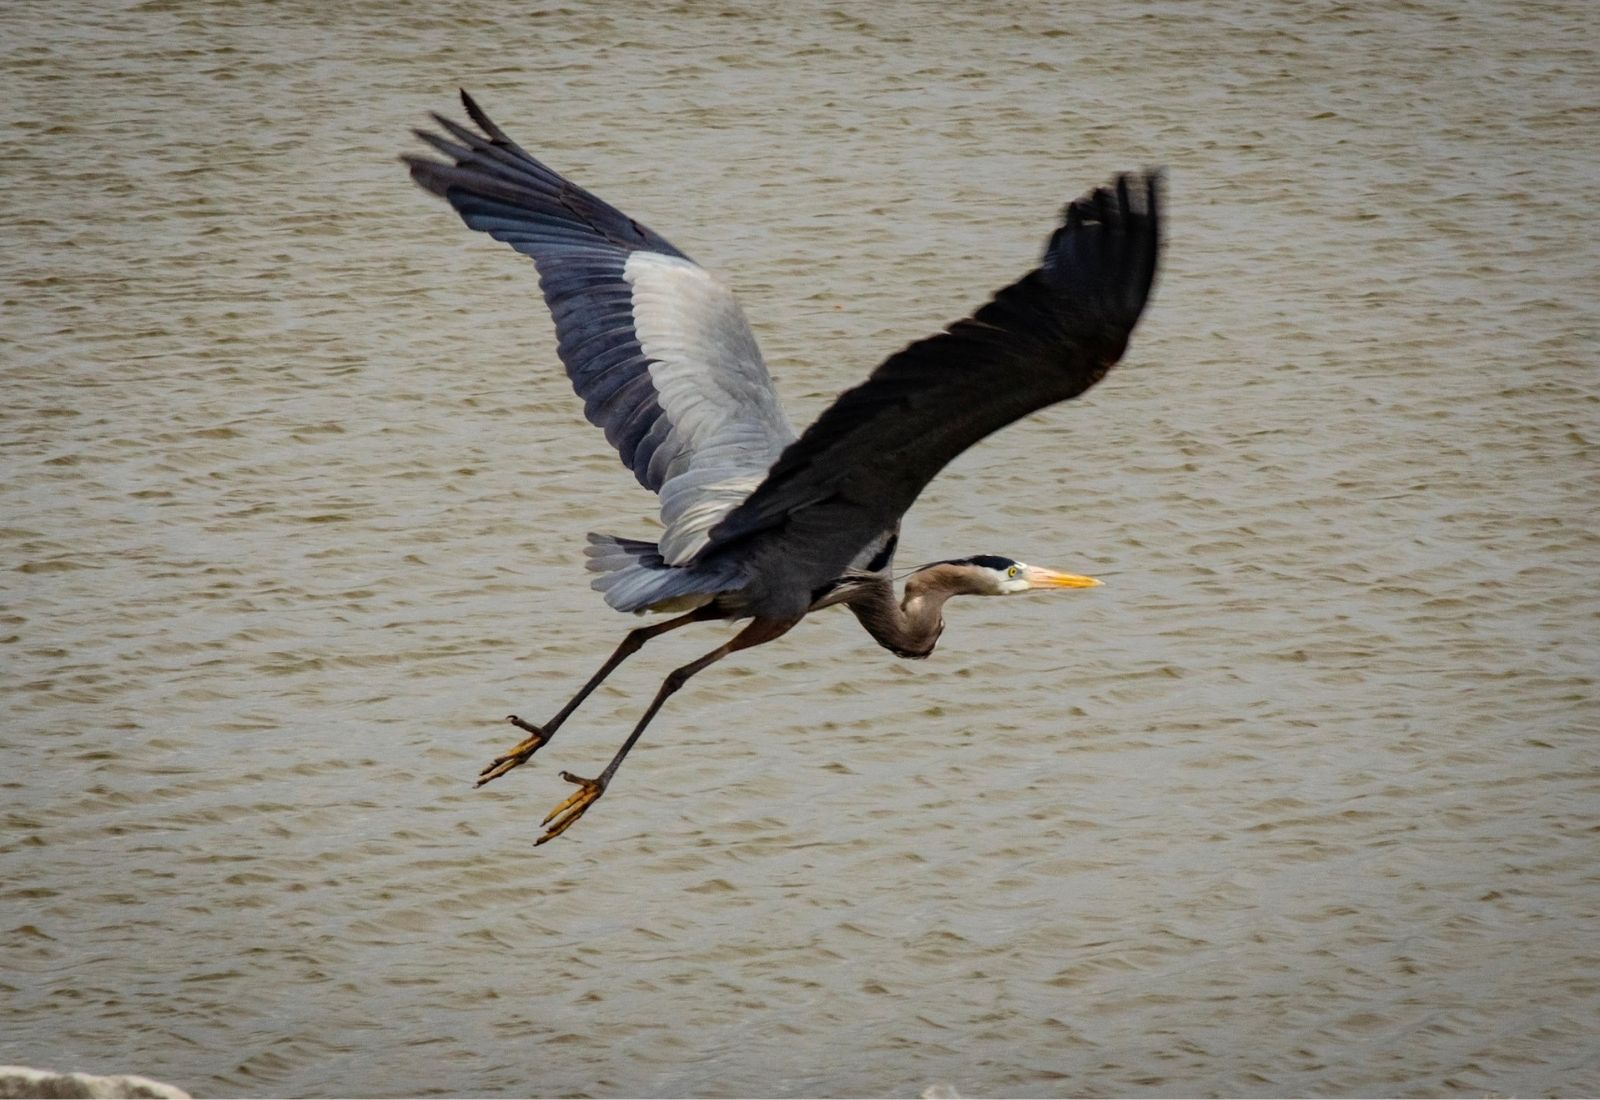 Great Heron flying over water